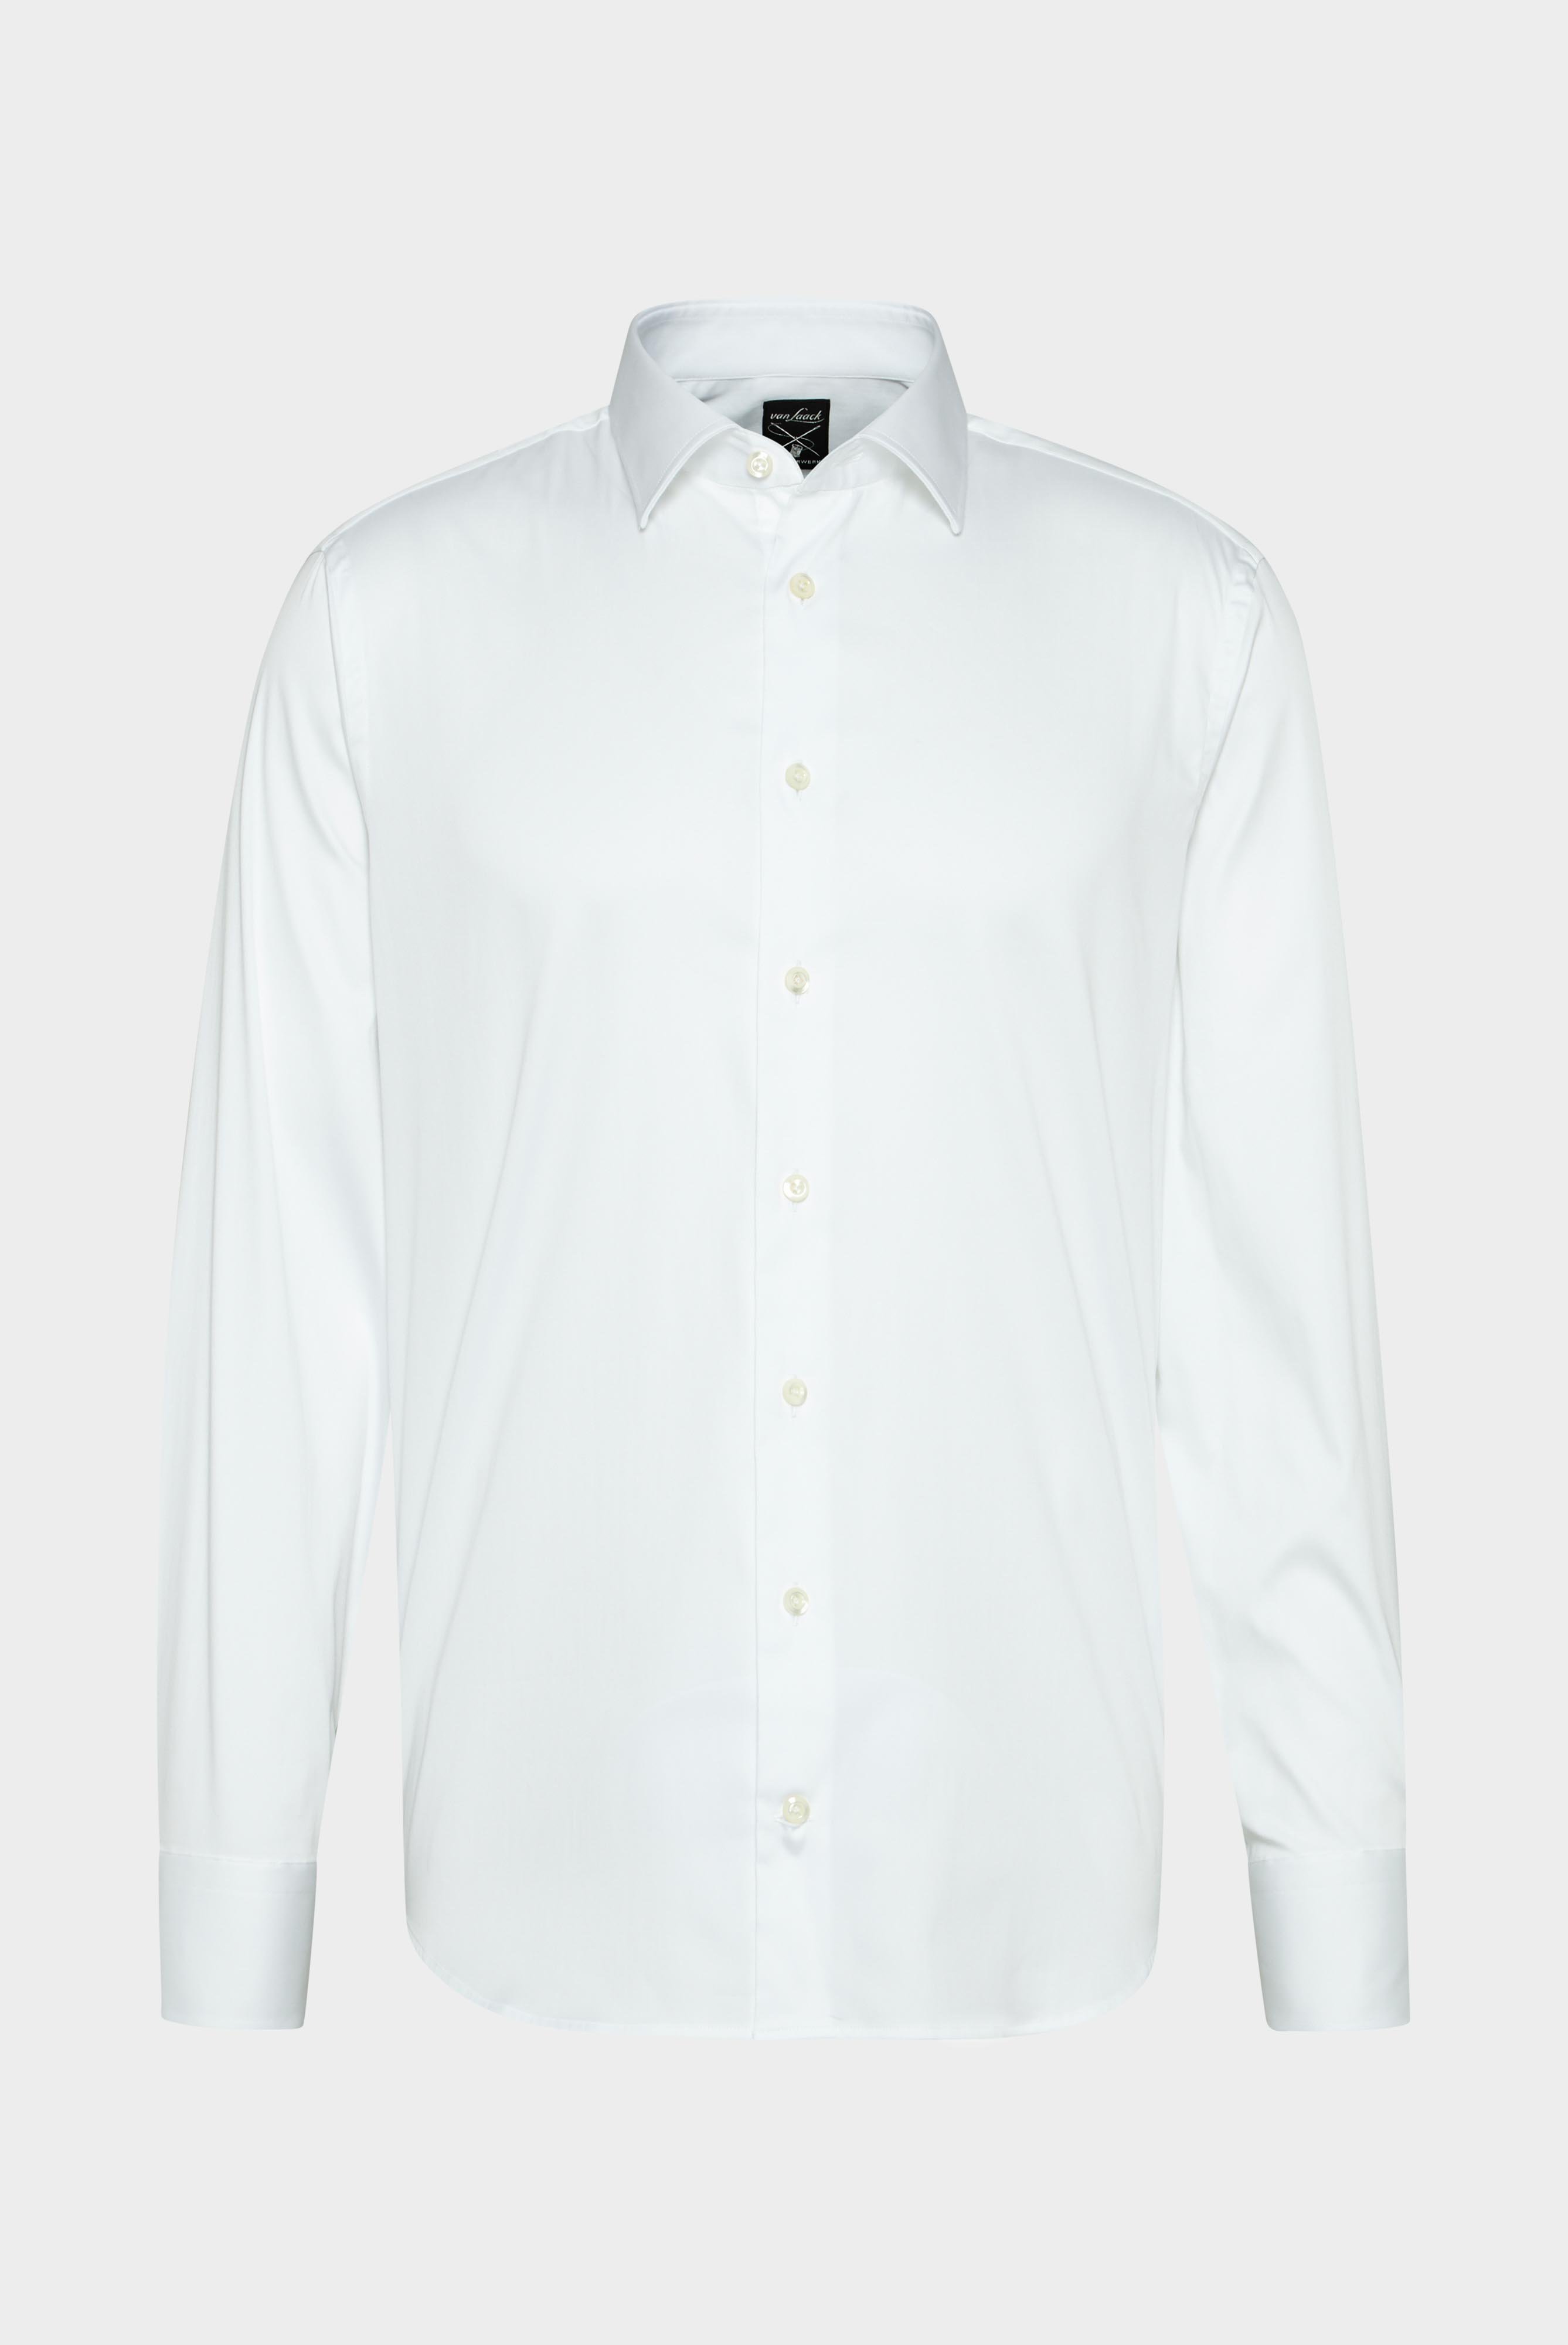 Business Shirts+Cotton Stretch Poplin Shirt+20.2011.AV.130830.000.37